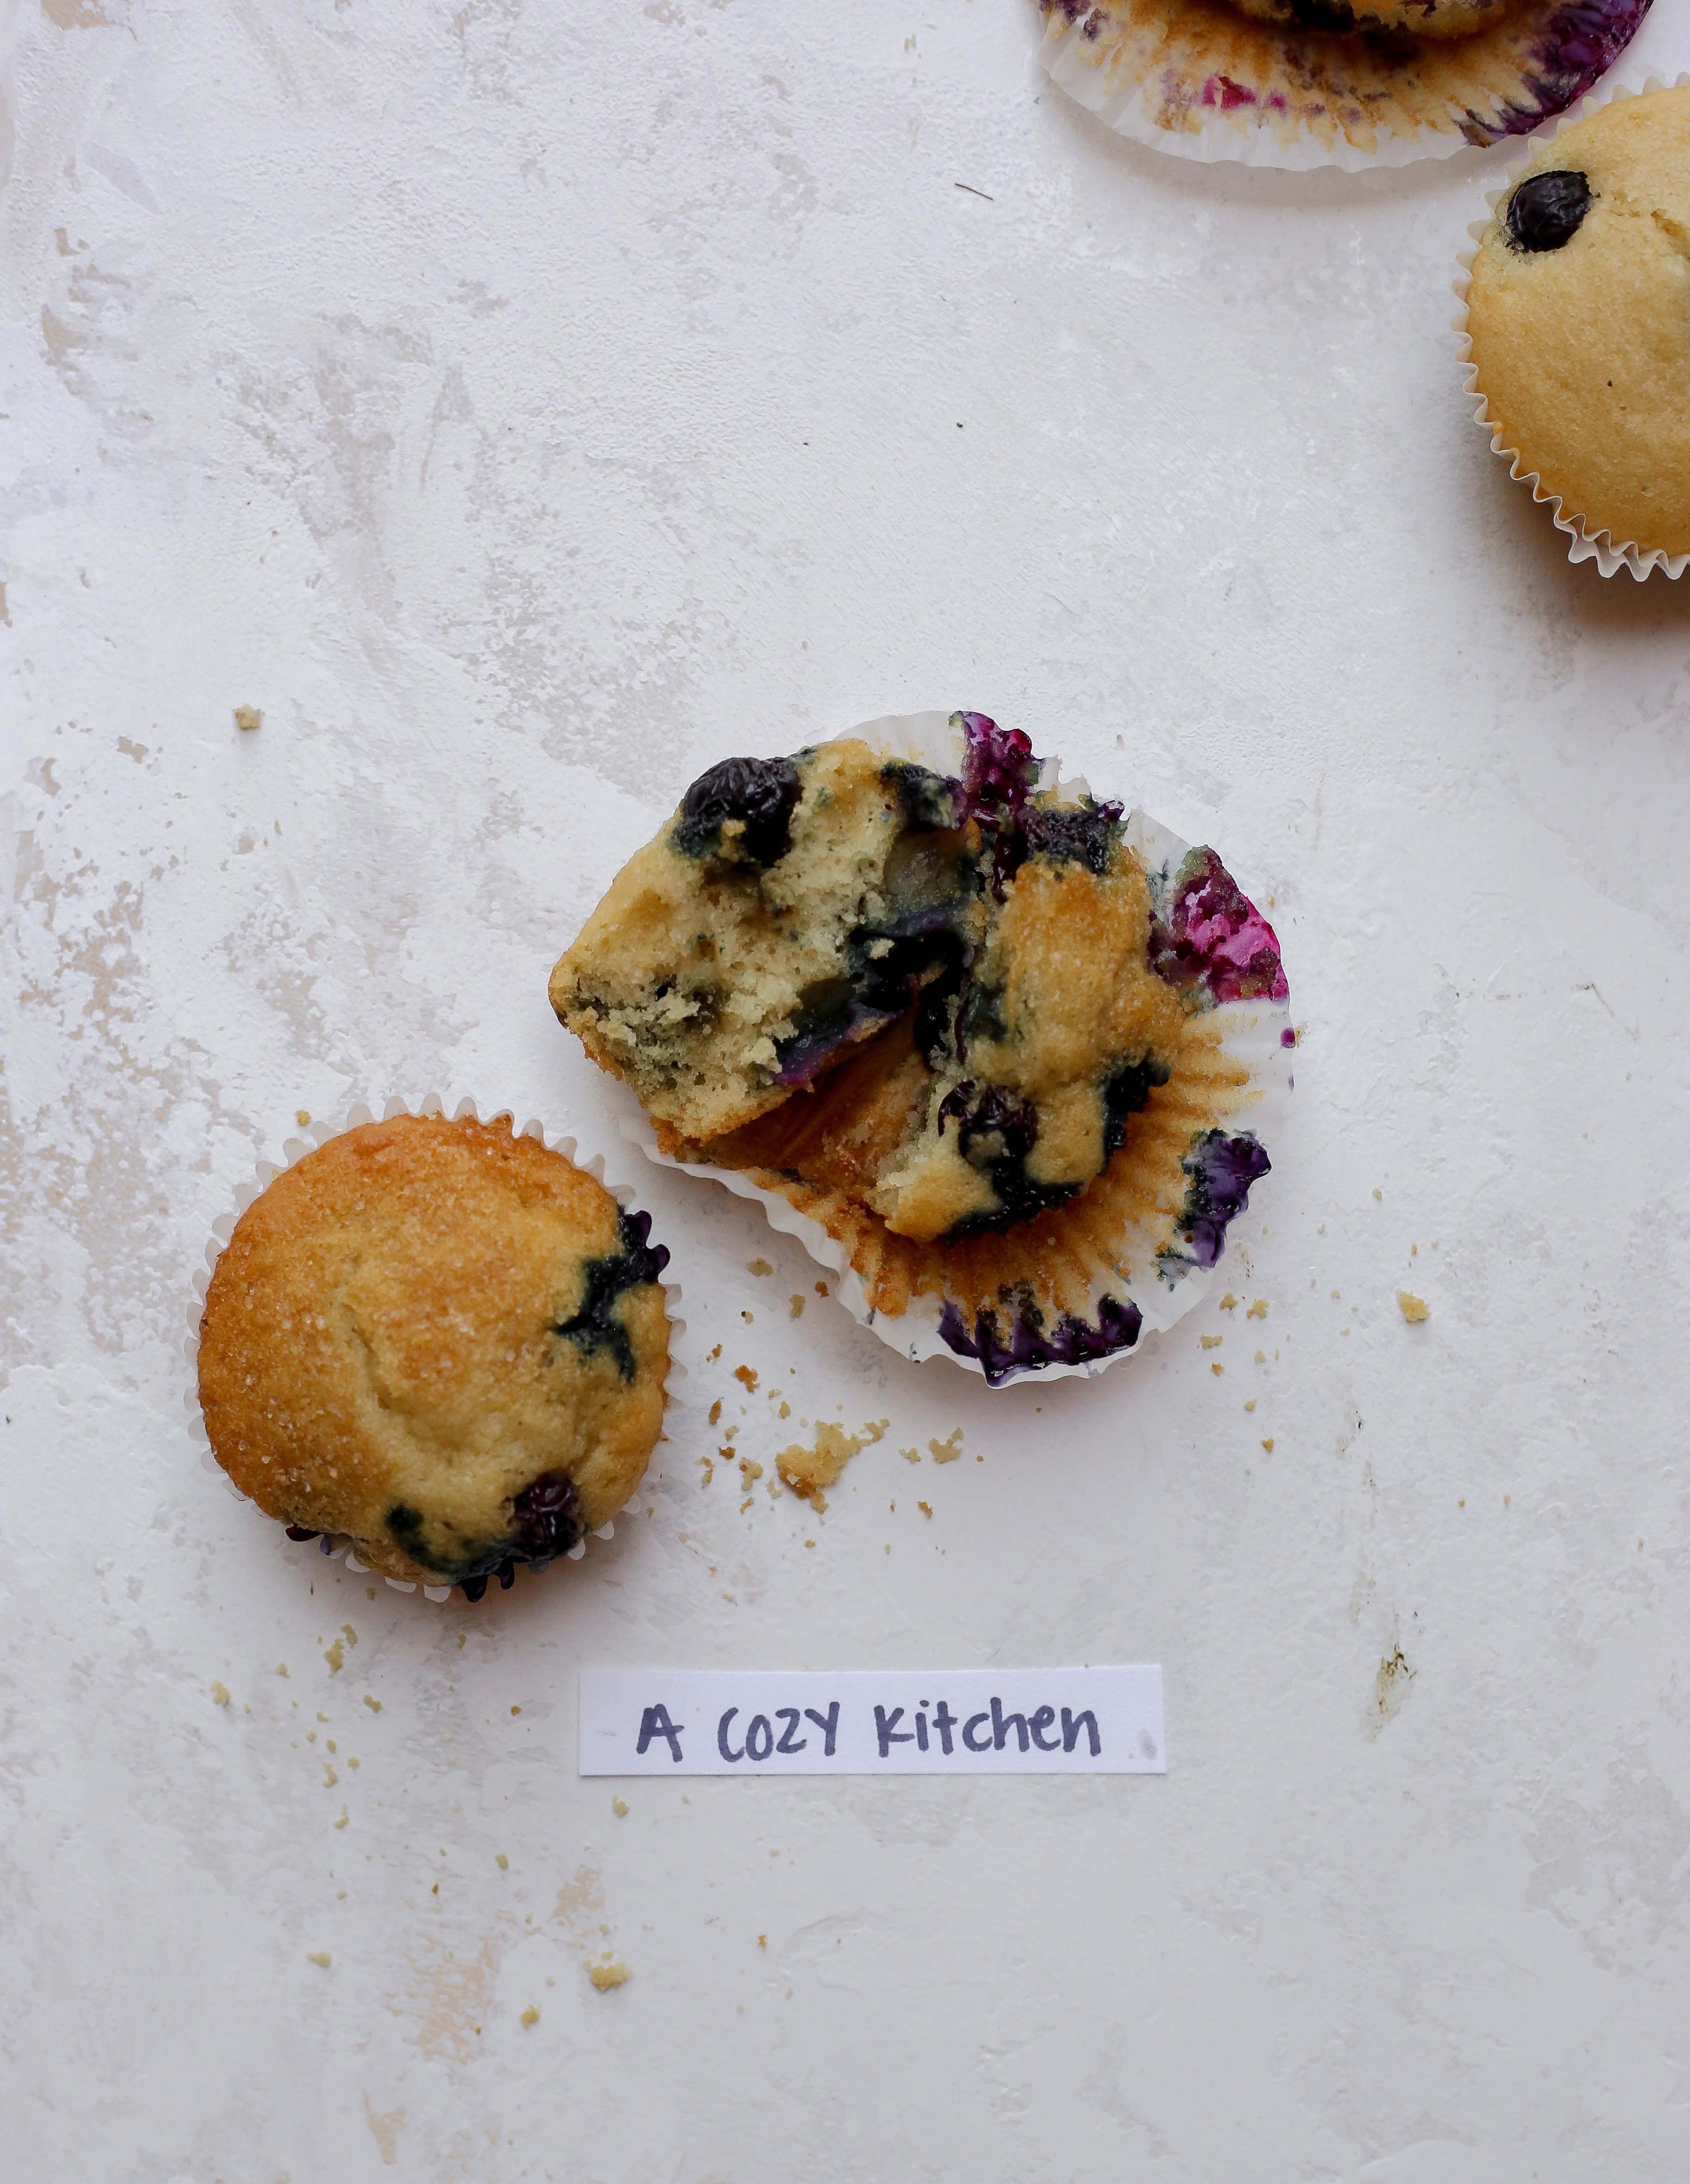 blueberry muffin recipe taste off - which blueberry muffin recipe is the best on the internet?